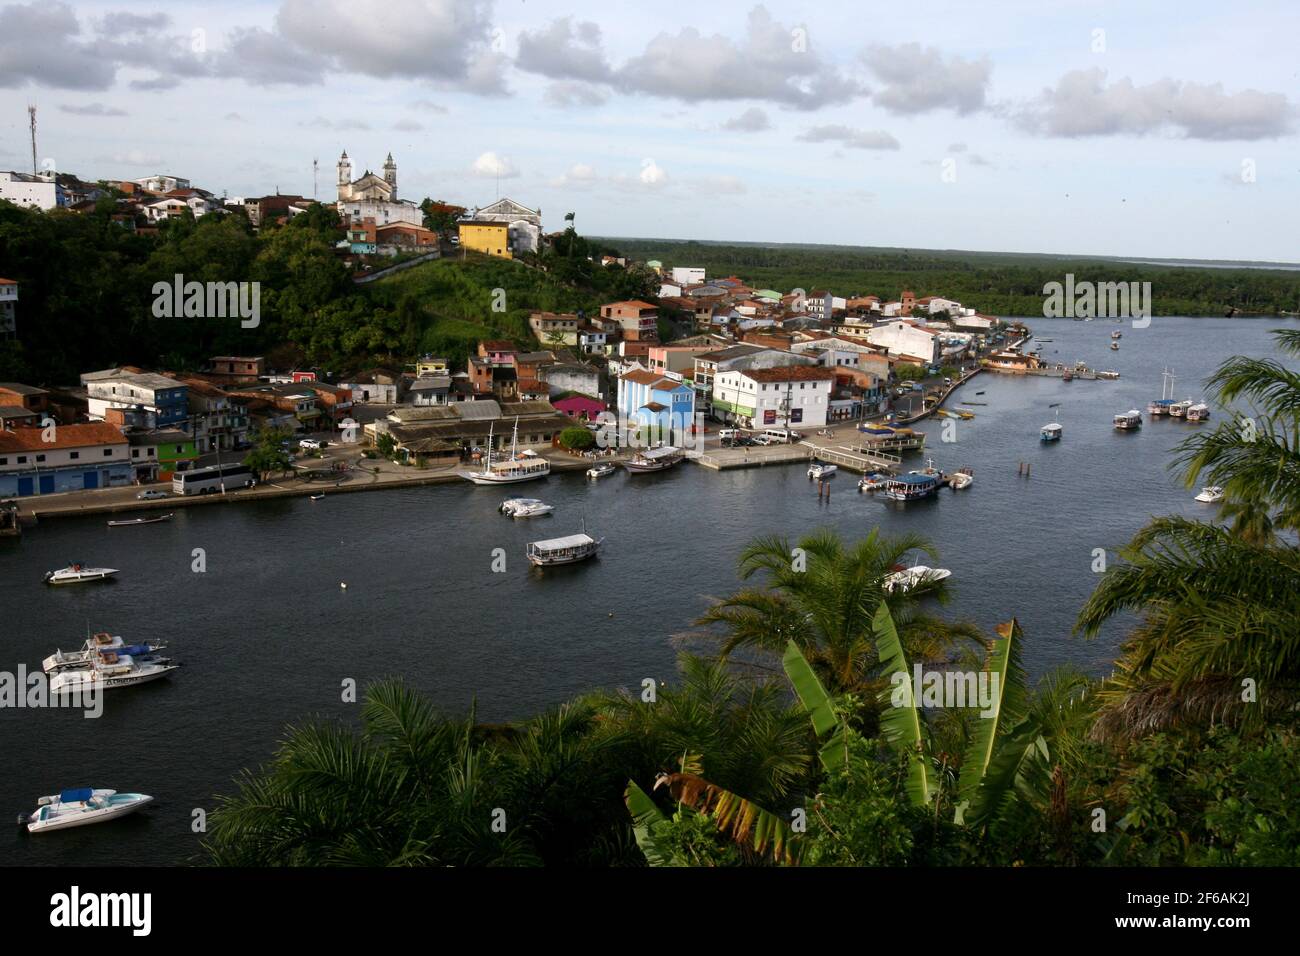 camamu, bahia / brazil - january 10, 2012: view of the Camamu Bay located in the lower south of Bahia, a region known as Costa do Dende.            ** Stock Photo